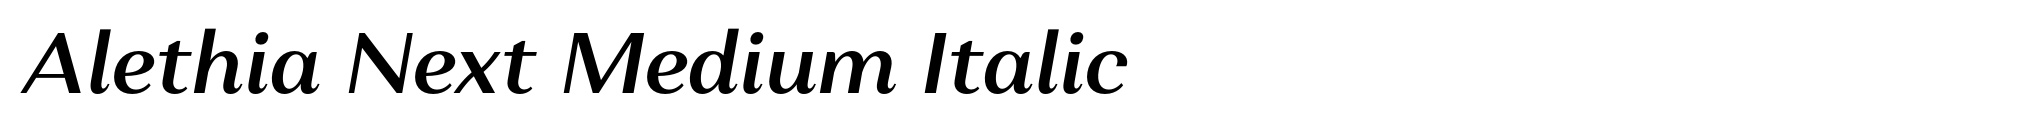 Alethia Next Medium Italic image